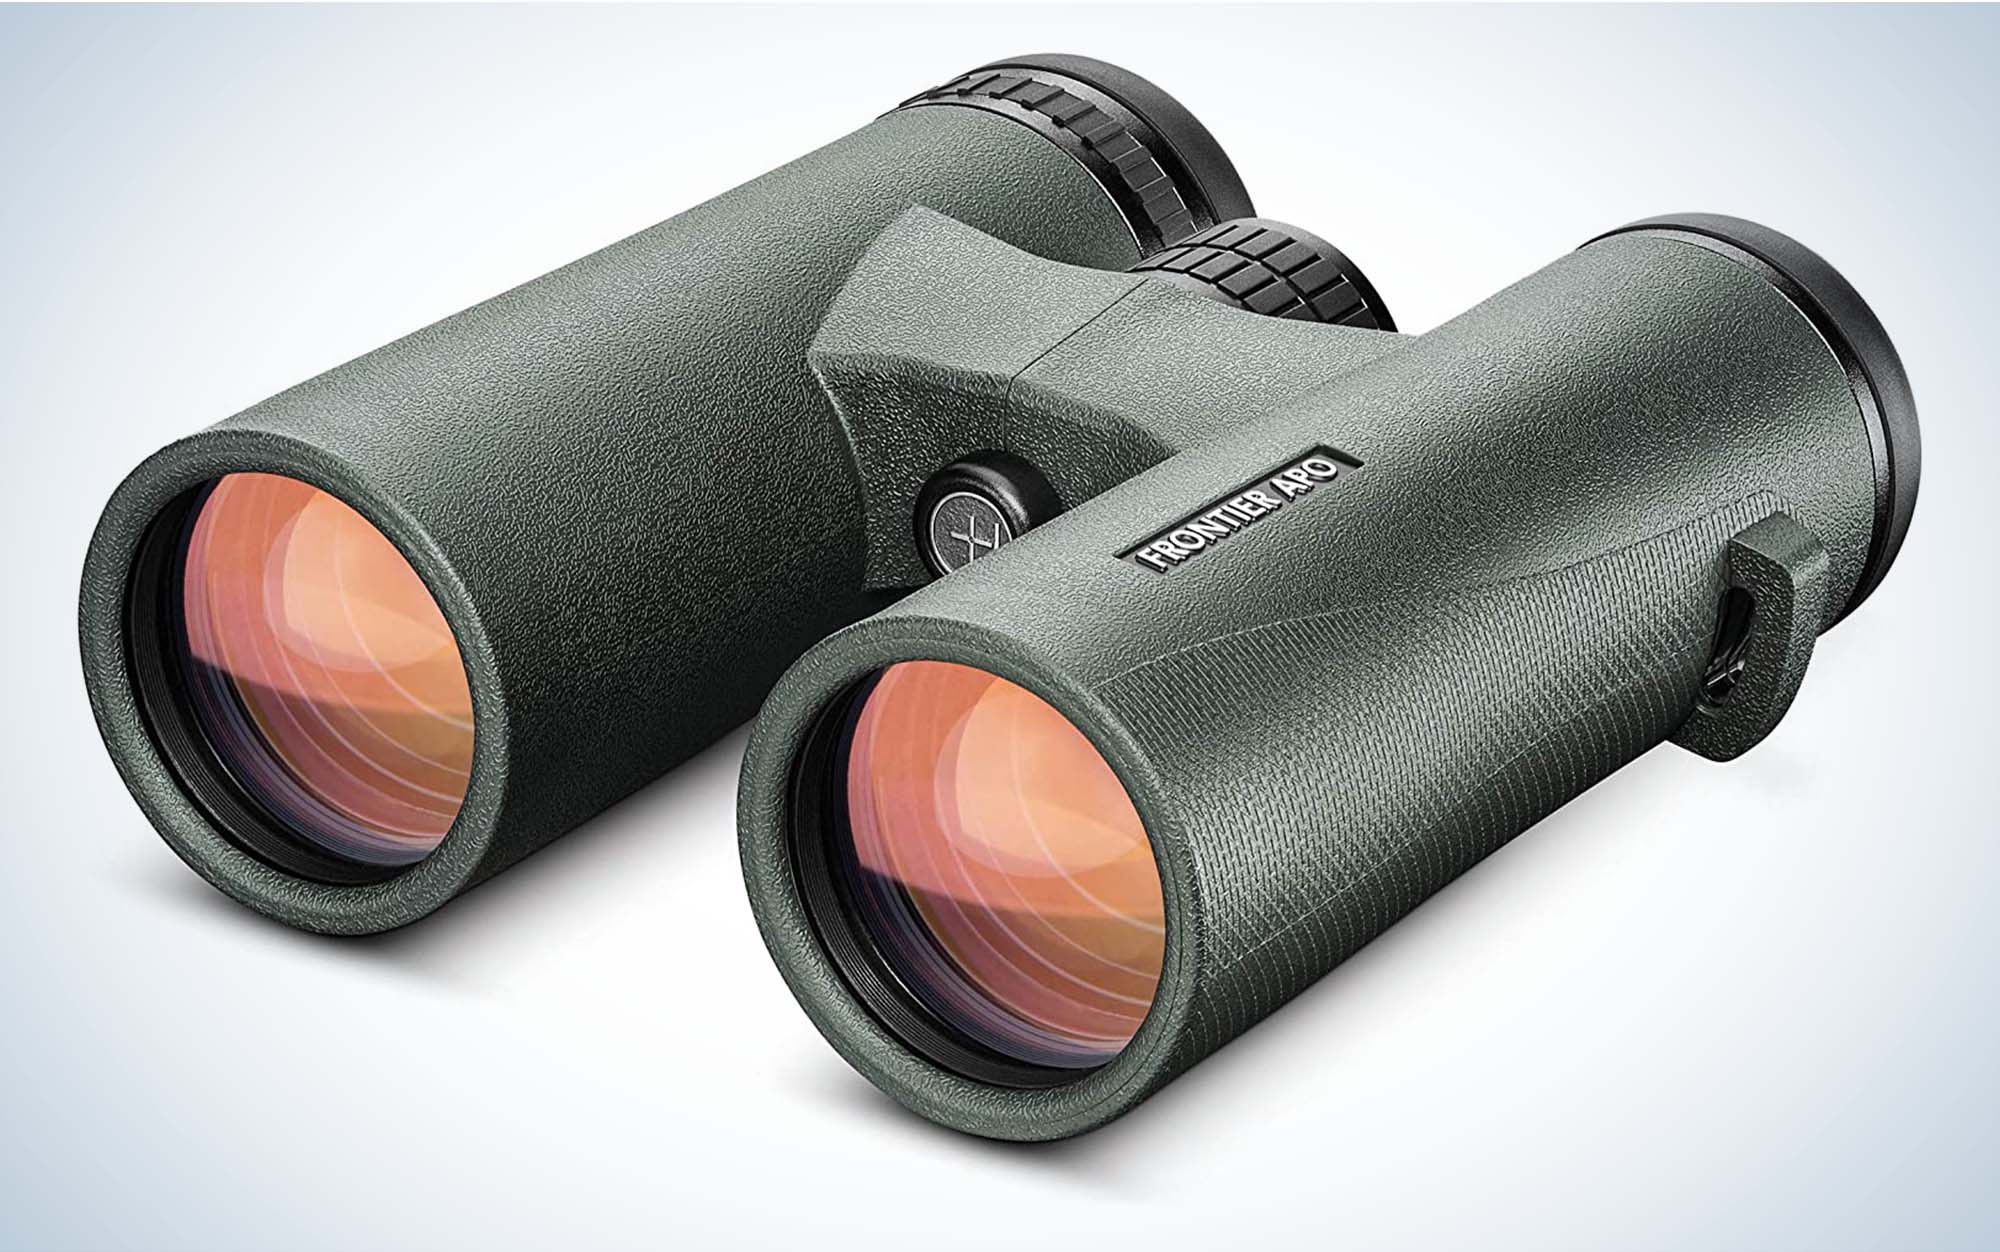 The Hawke Vantage 8x42 are the best budget binoculars.